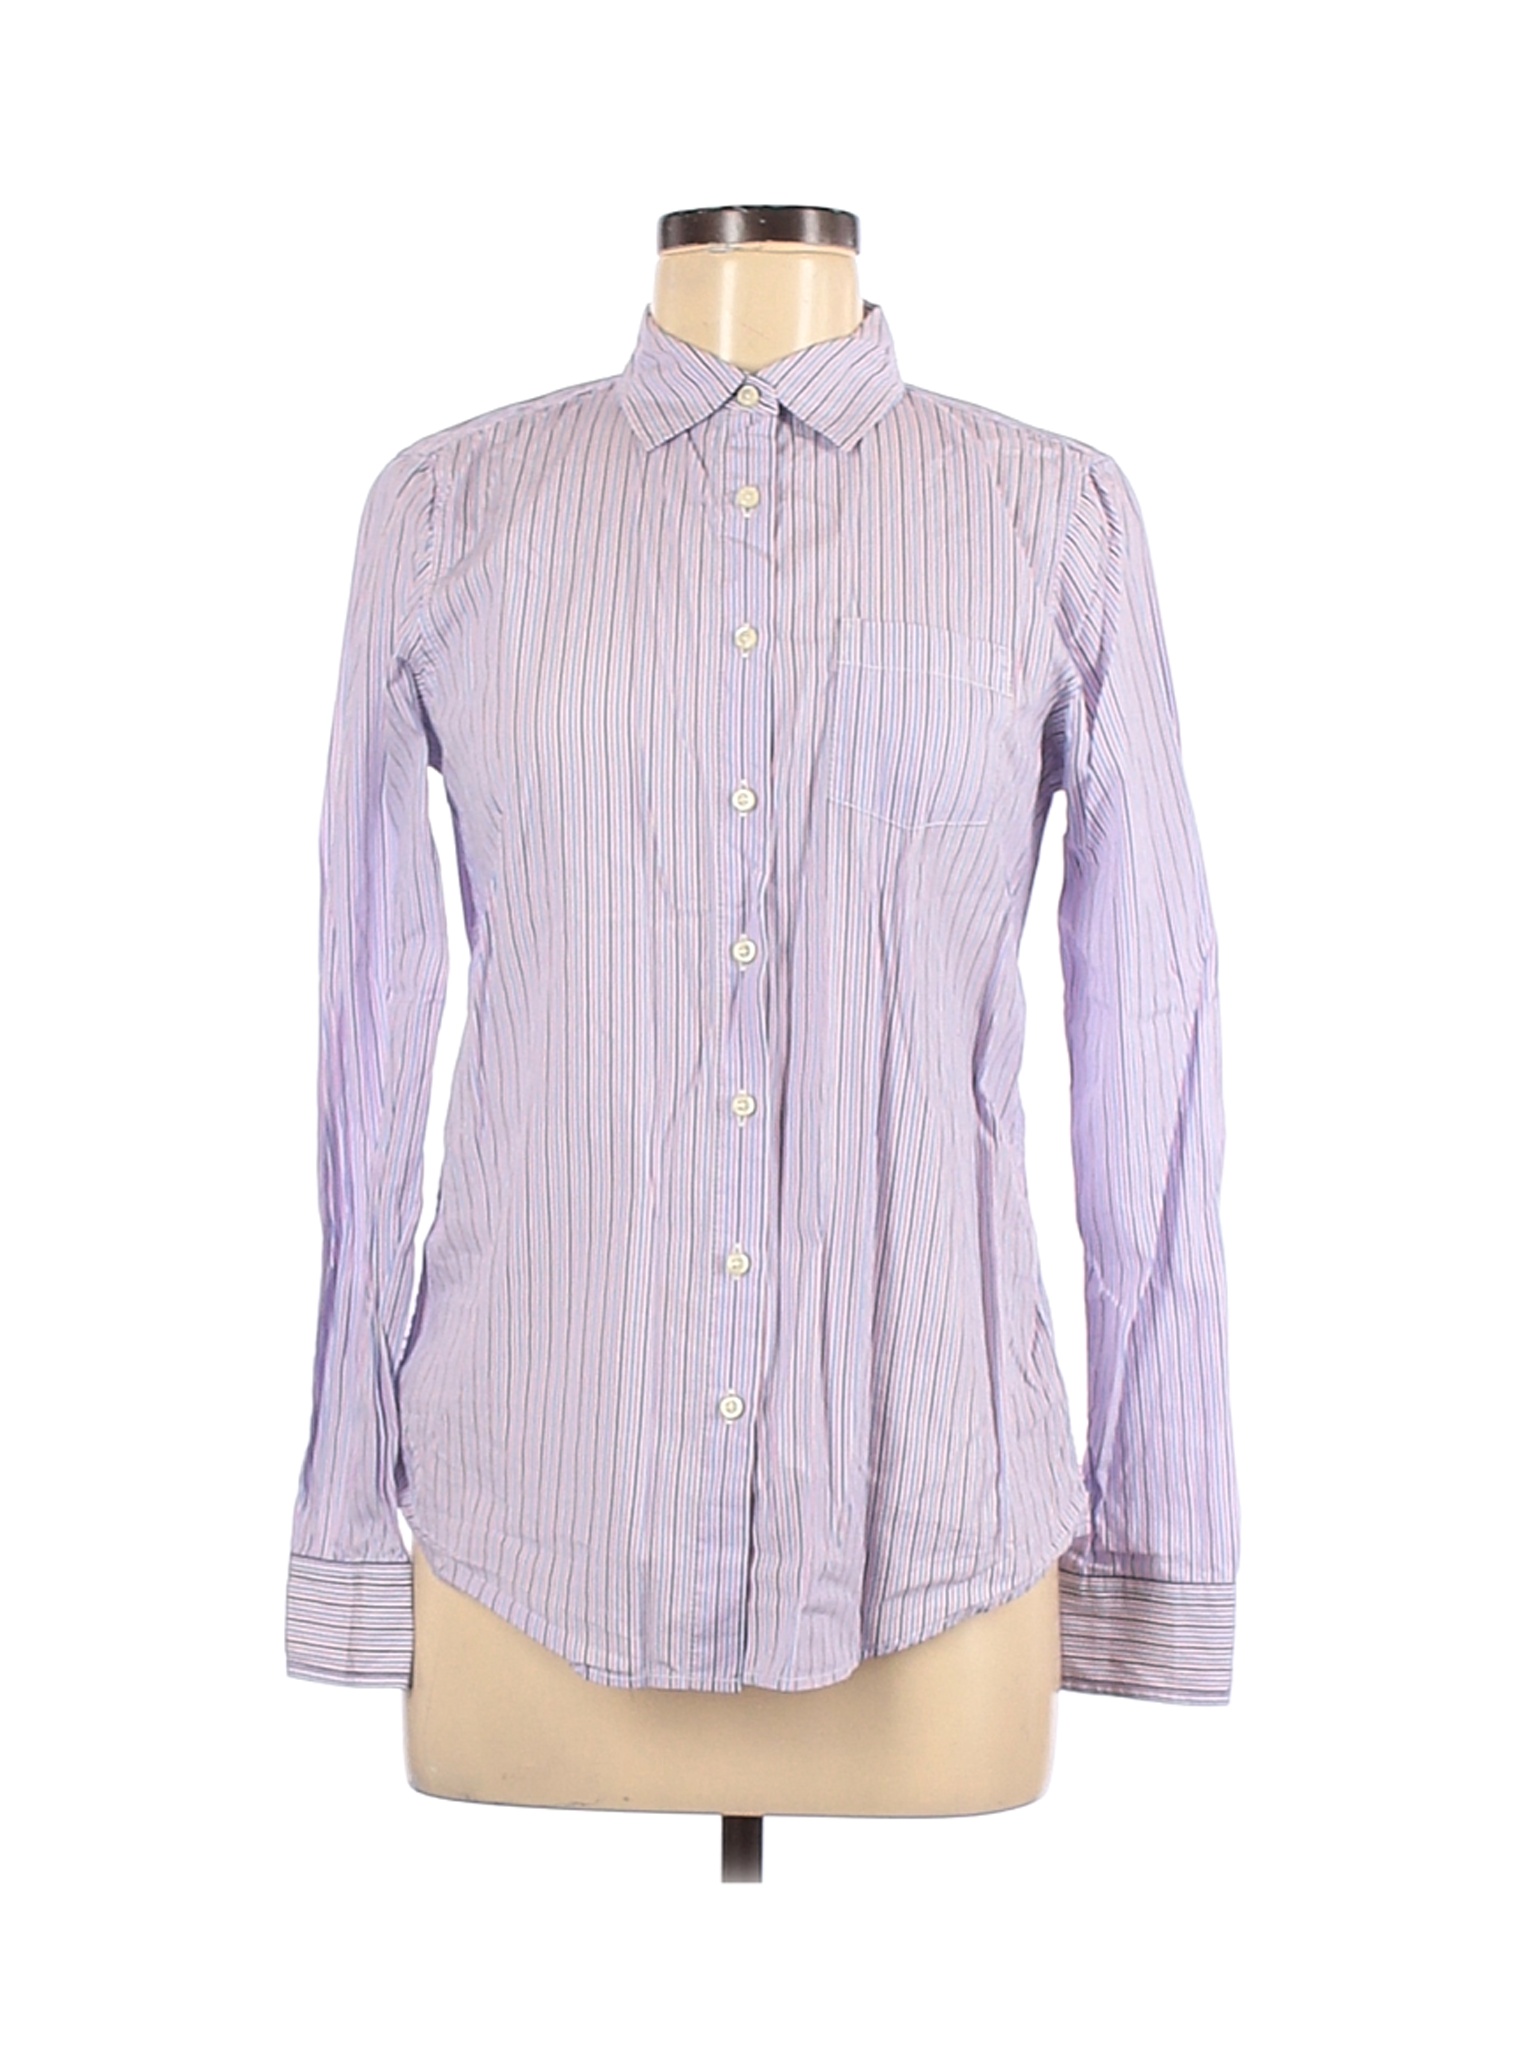 Gap Women Purple Long Sleeve Button-Down Shirt M | eBay